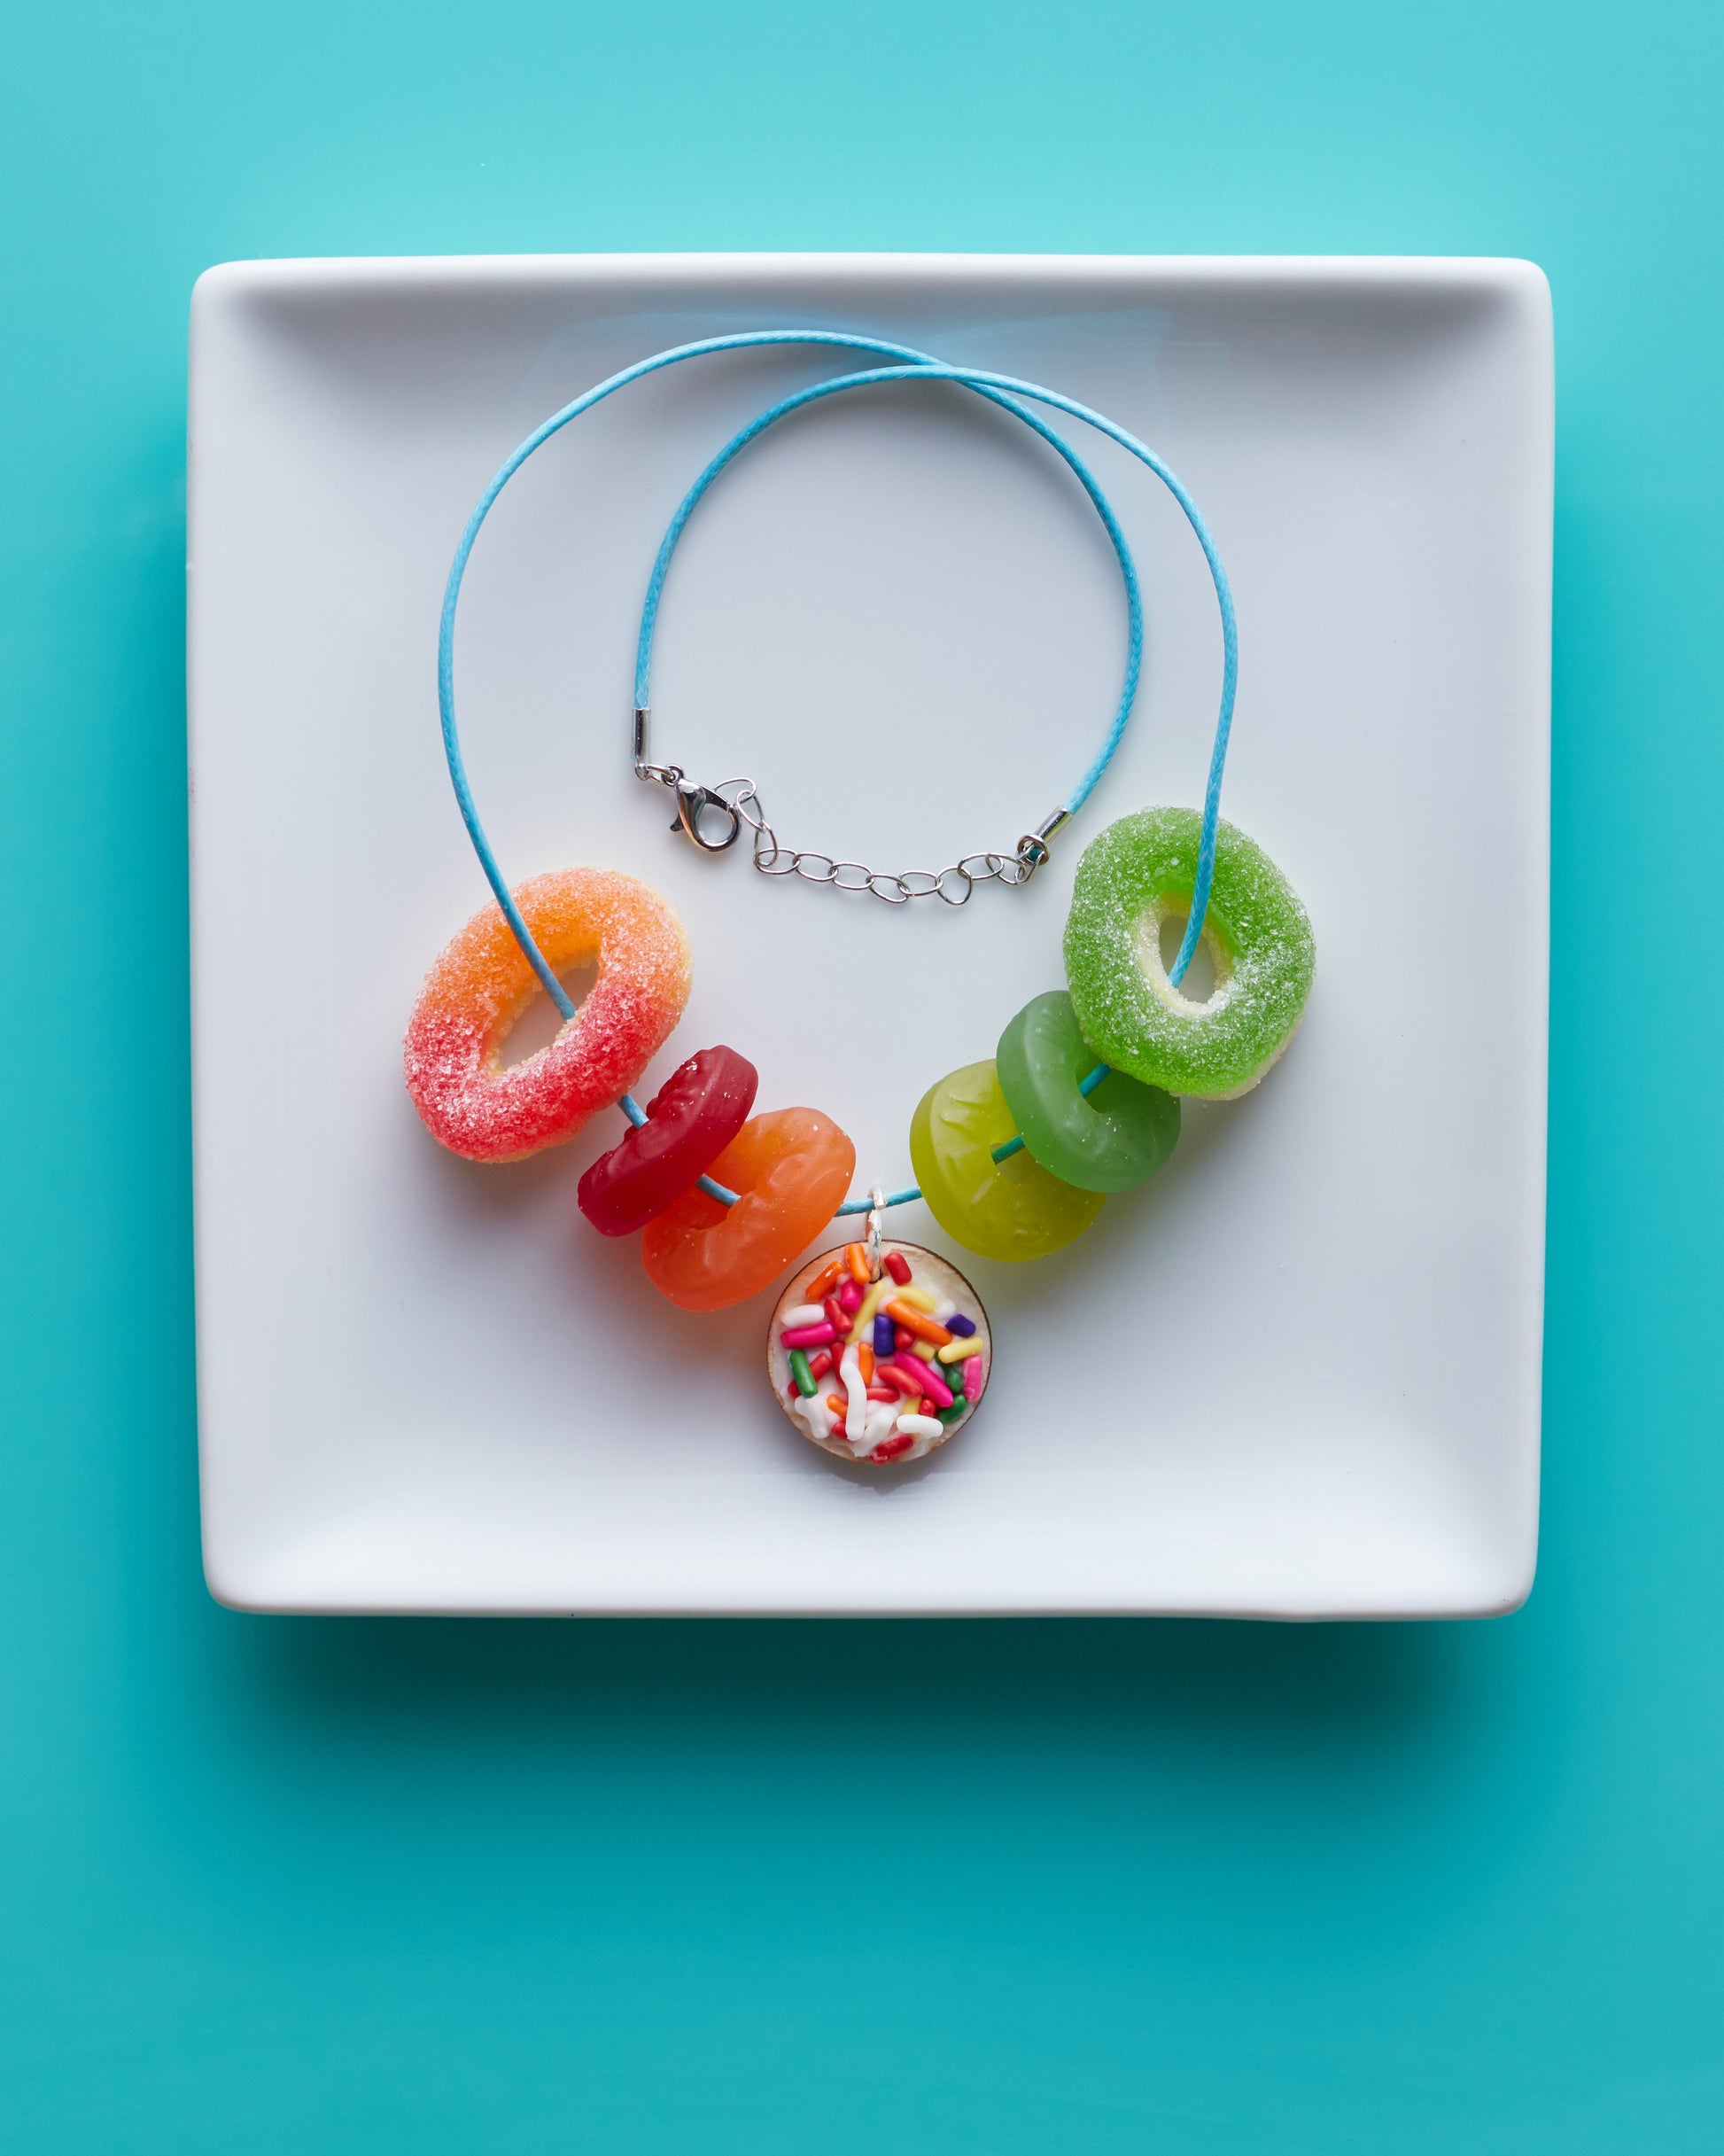 Candy Jewelry Craft Kit